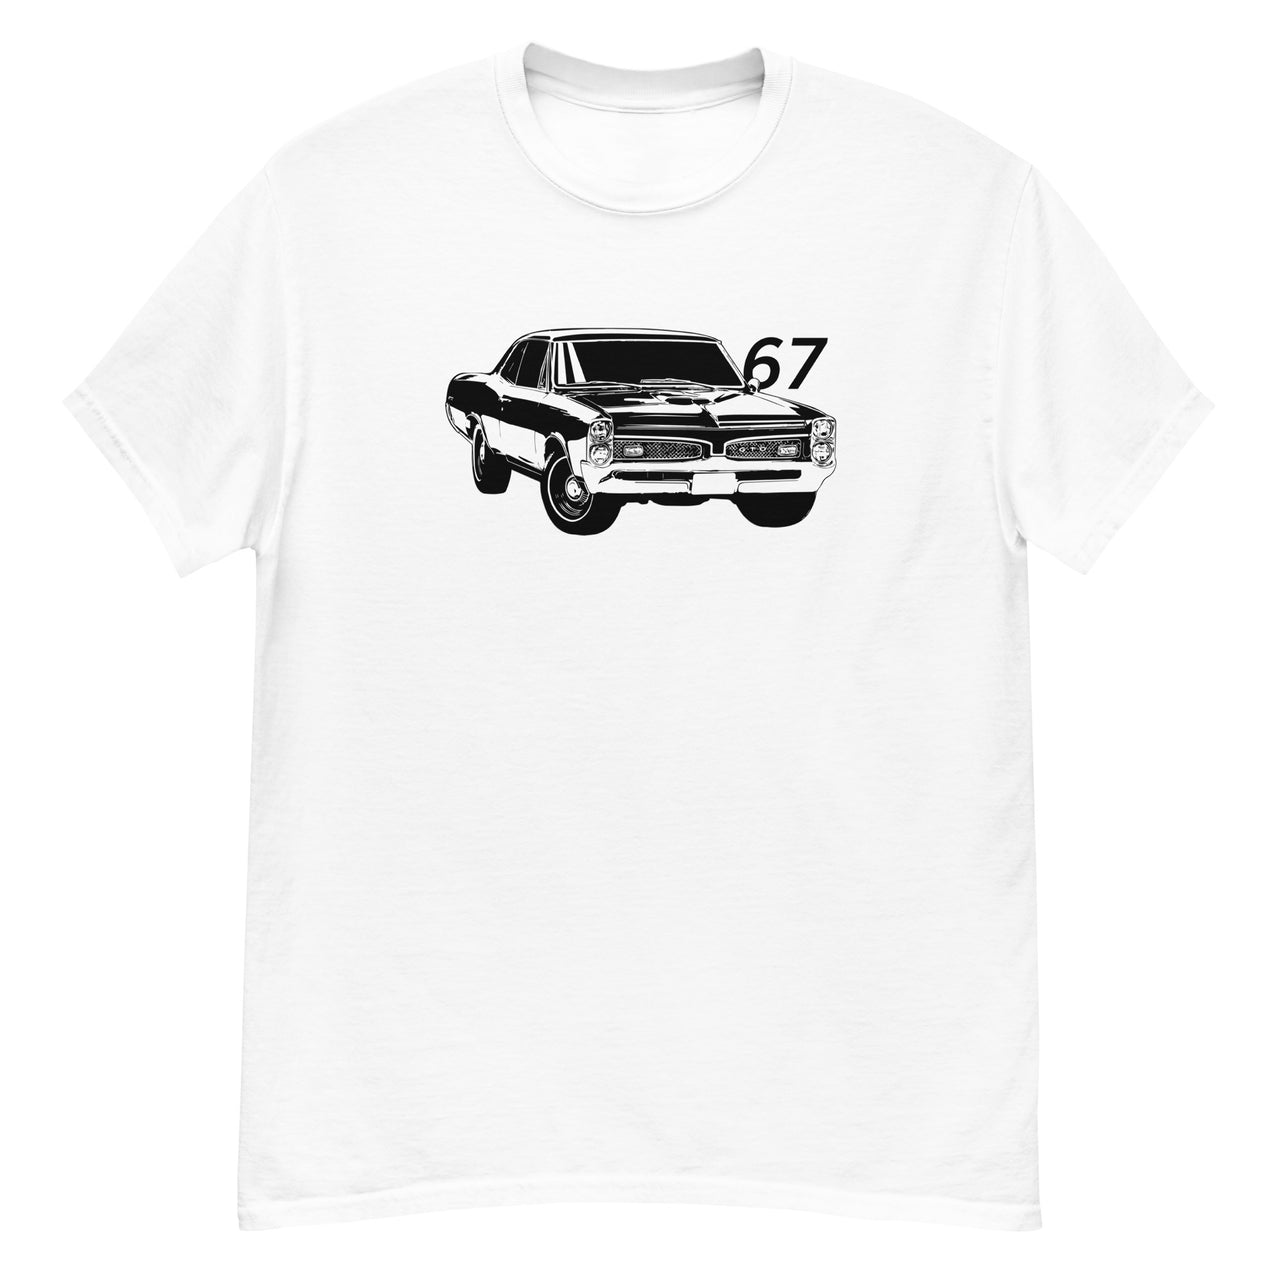 67 GTO T-Shirt, 60s Muscle Car Tee Shirt